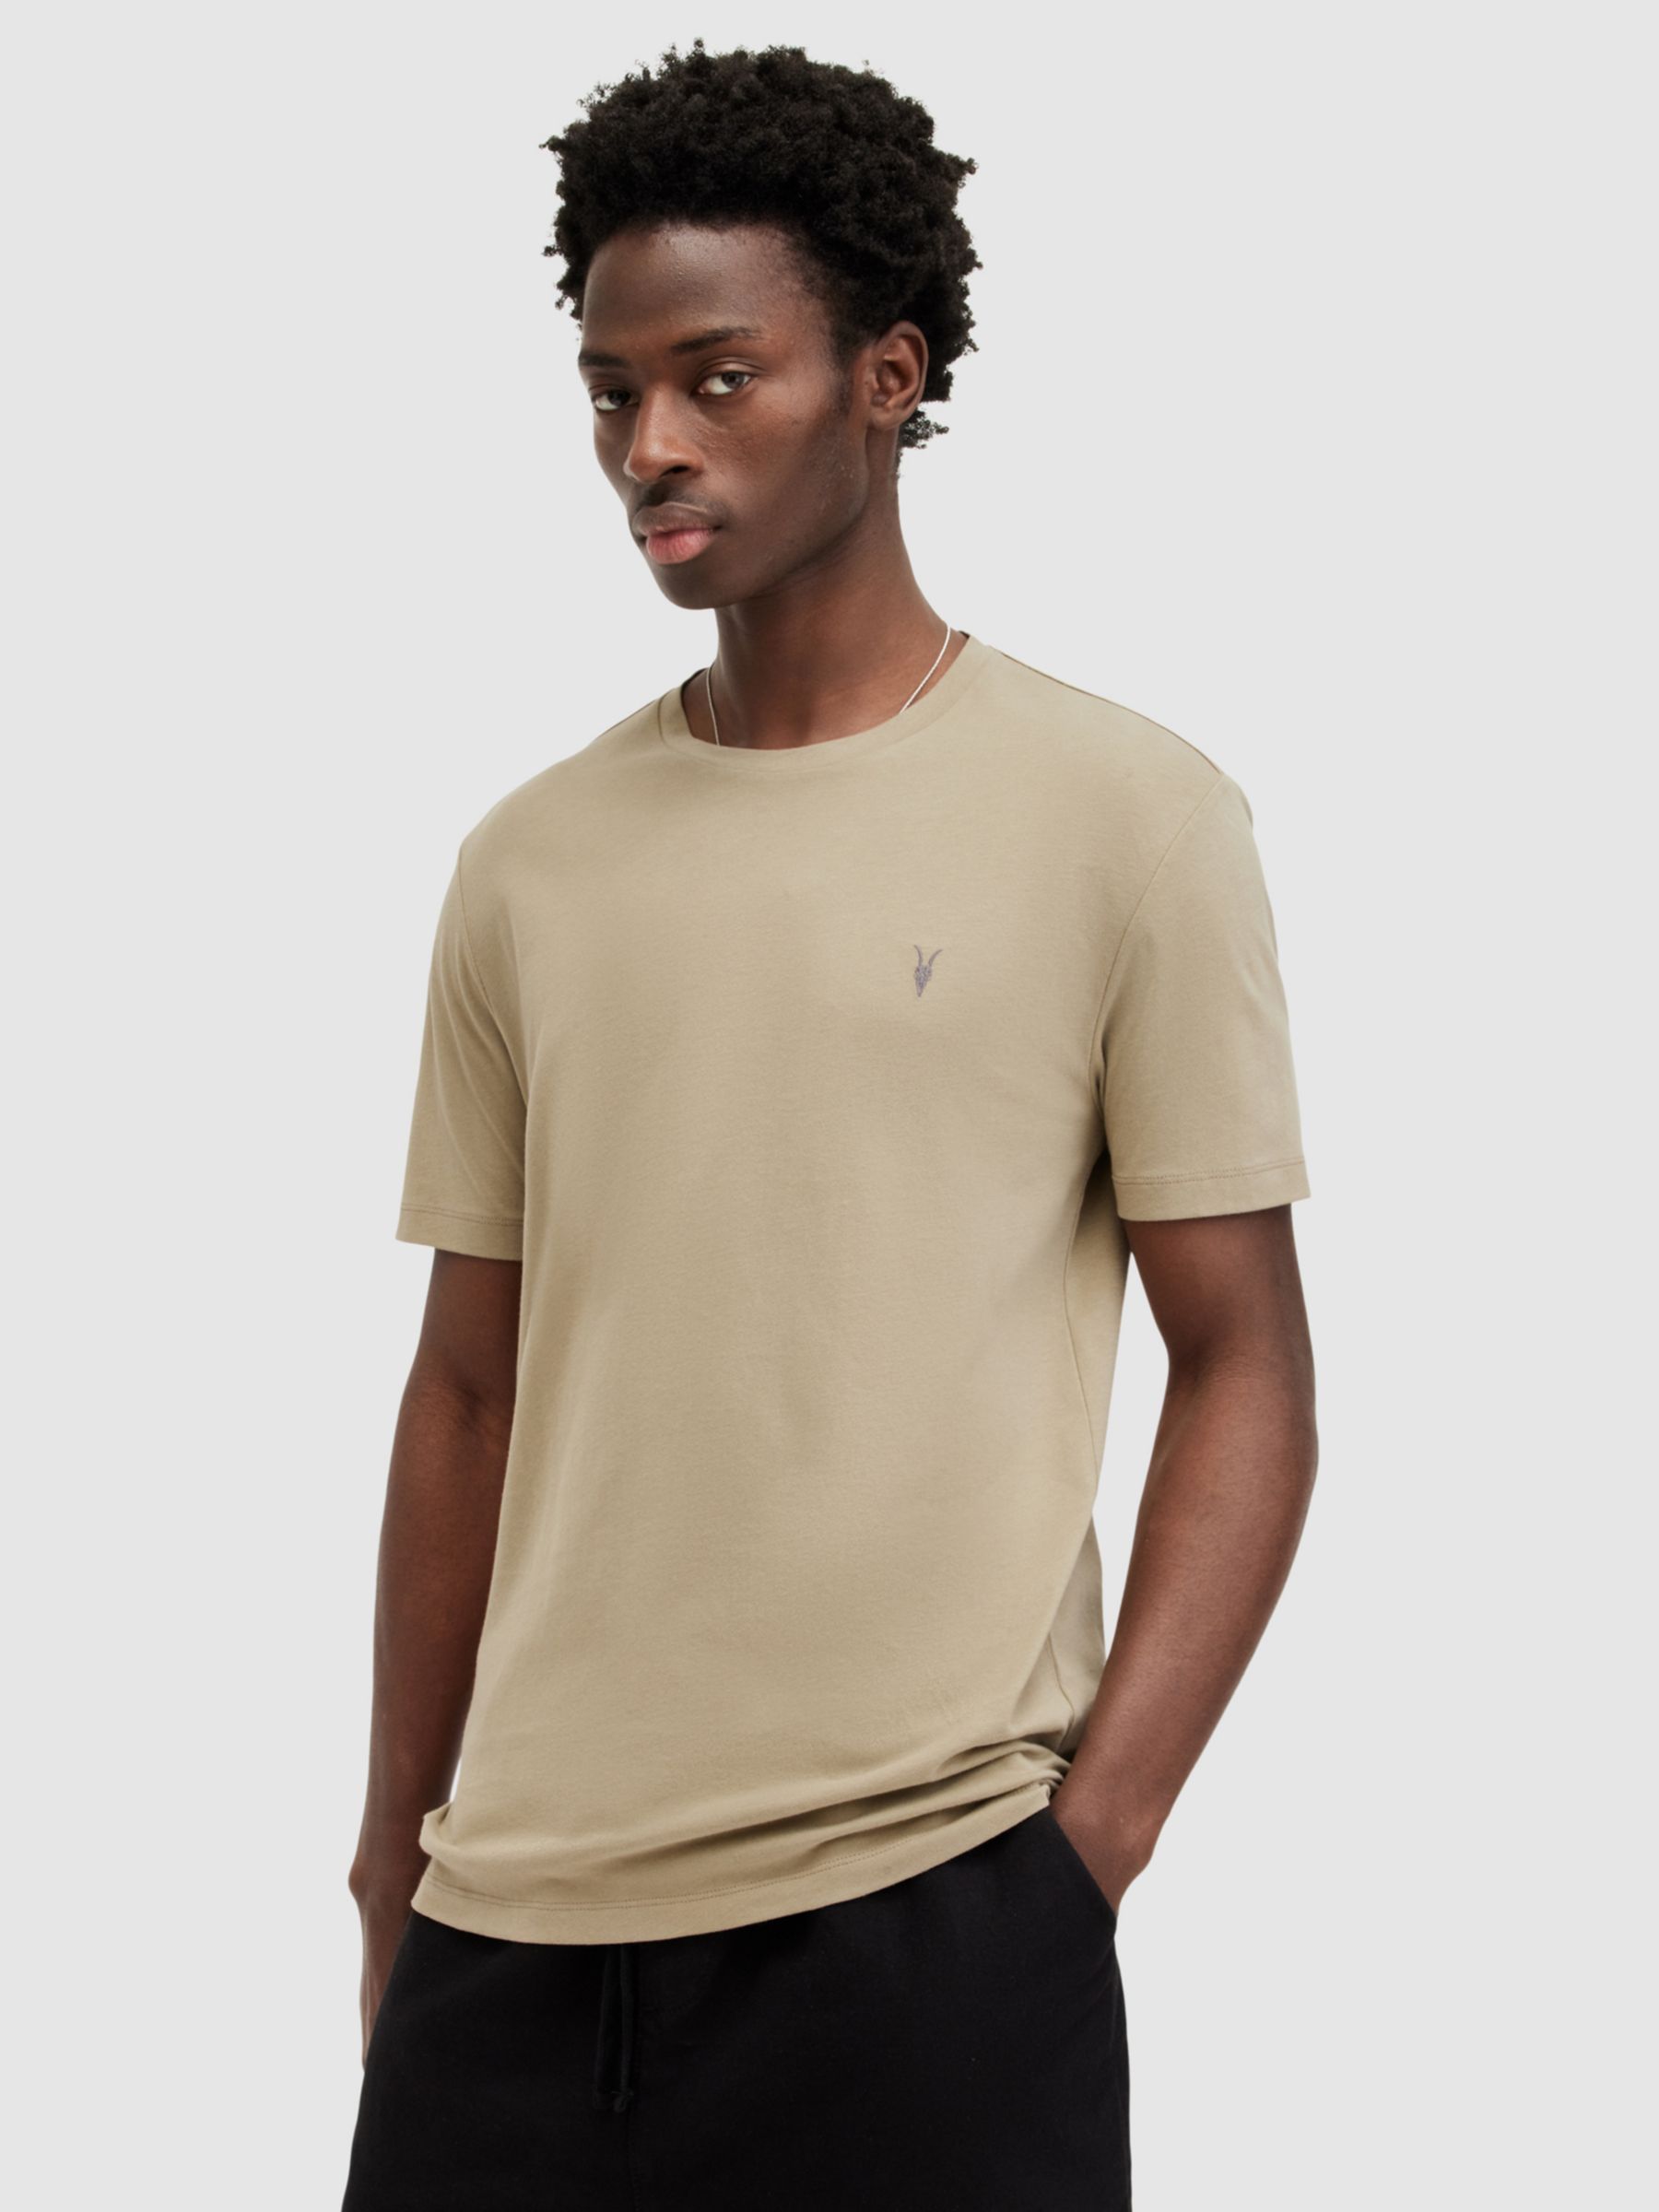 AllSaints Brace Contrast Organic Cotton Short Sleeve T-Shirt, Moorland Brown, L